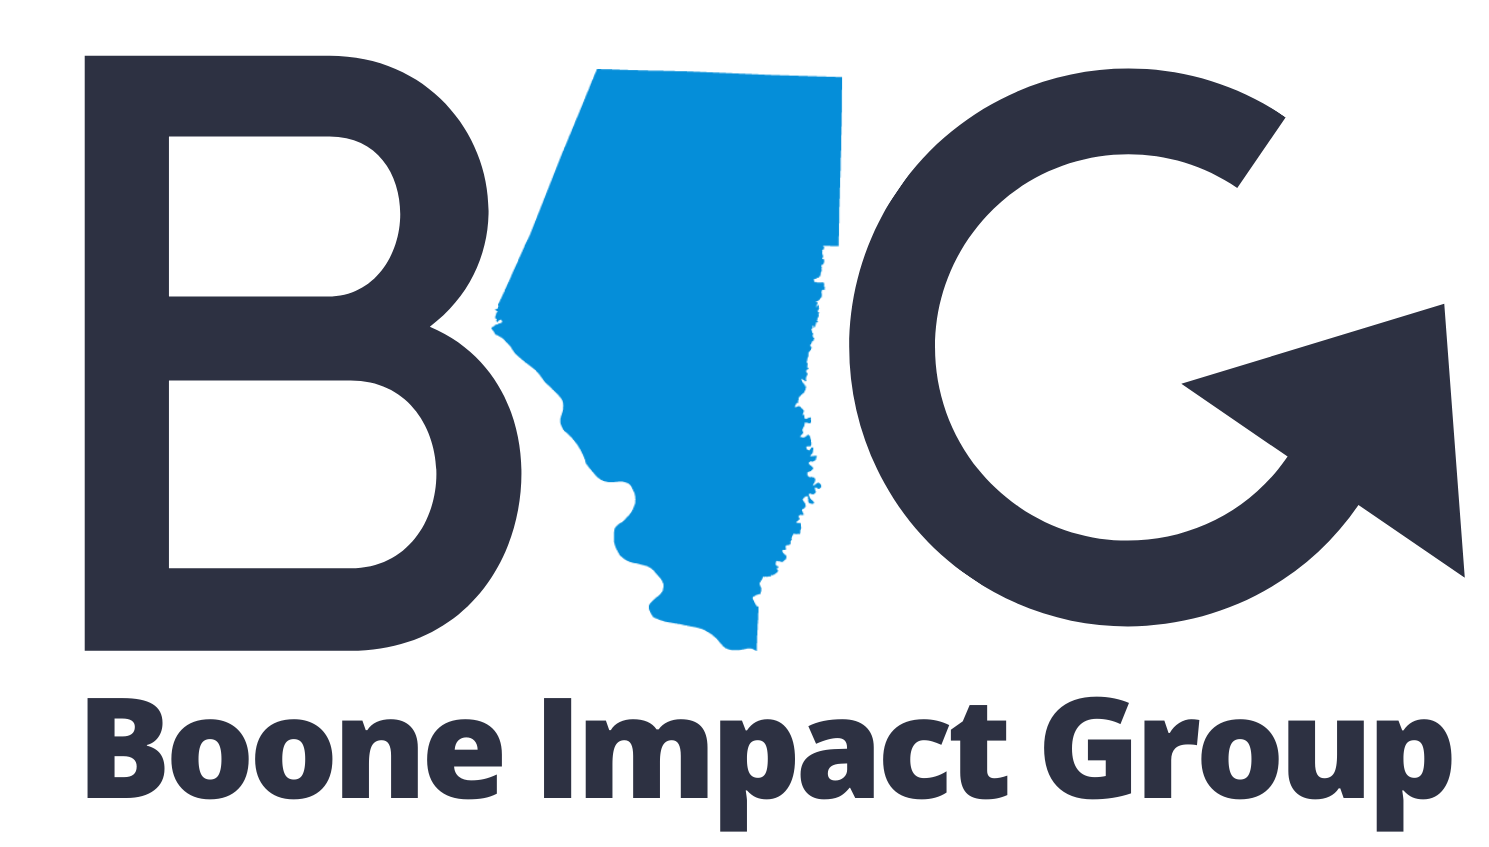 Boone Impact Group logo